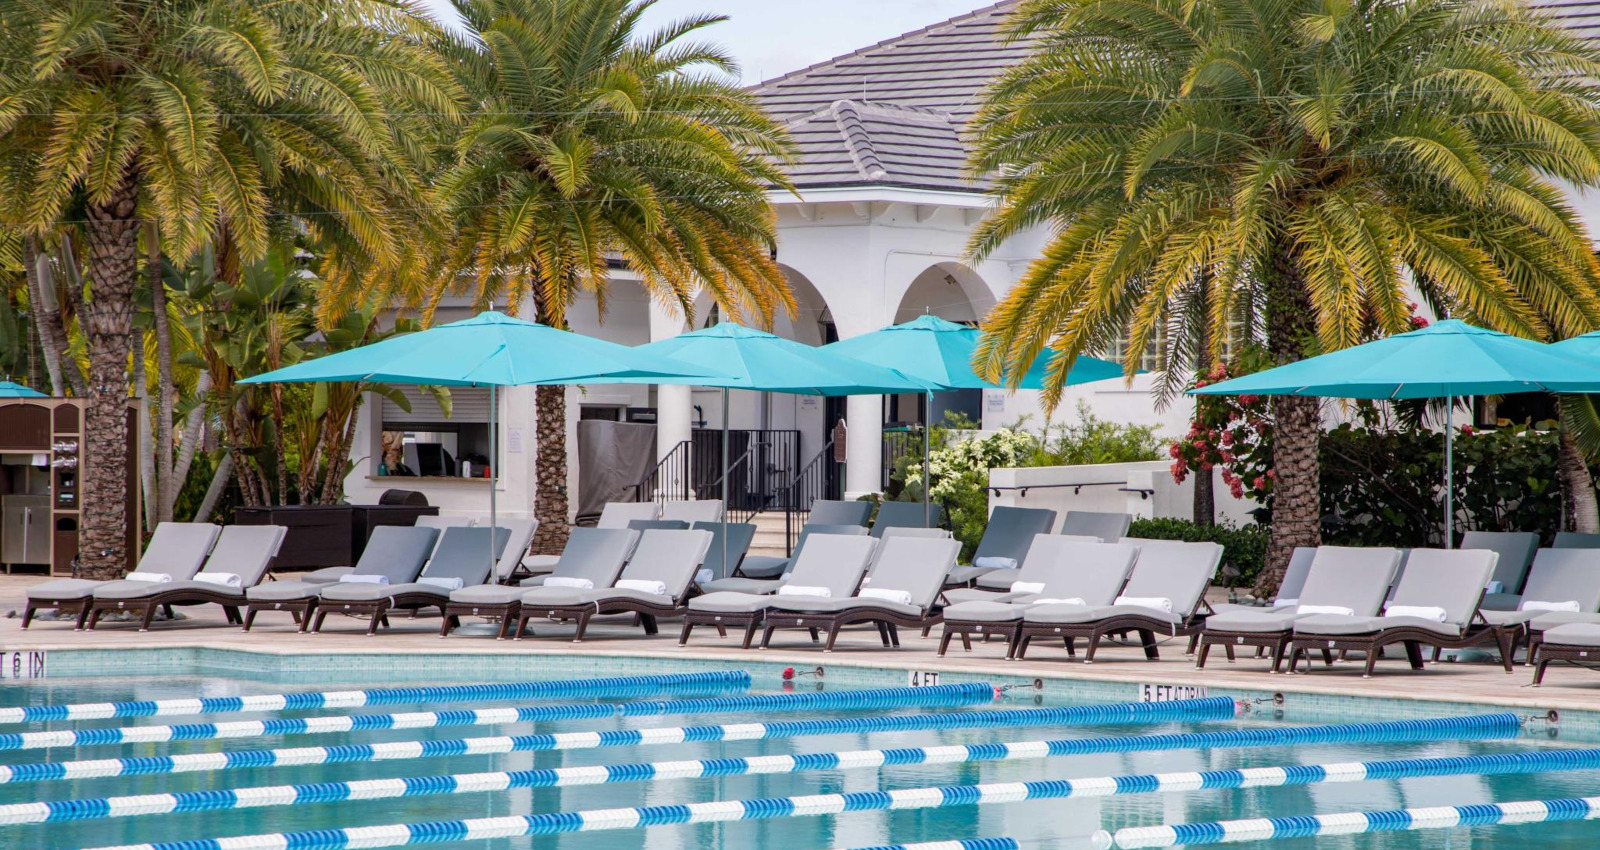 Resort Aquatic Center & Swimming Pools | Broken Sound Club Lifestyle Amenities | Private 18-Hole Golf Courses & Community | Boca Raton, FL | Palm Beach County